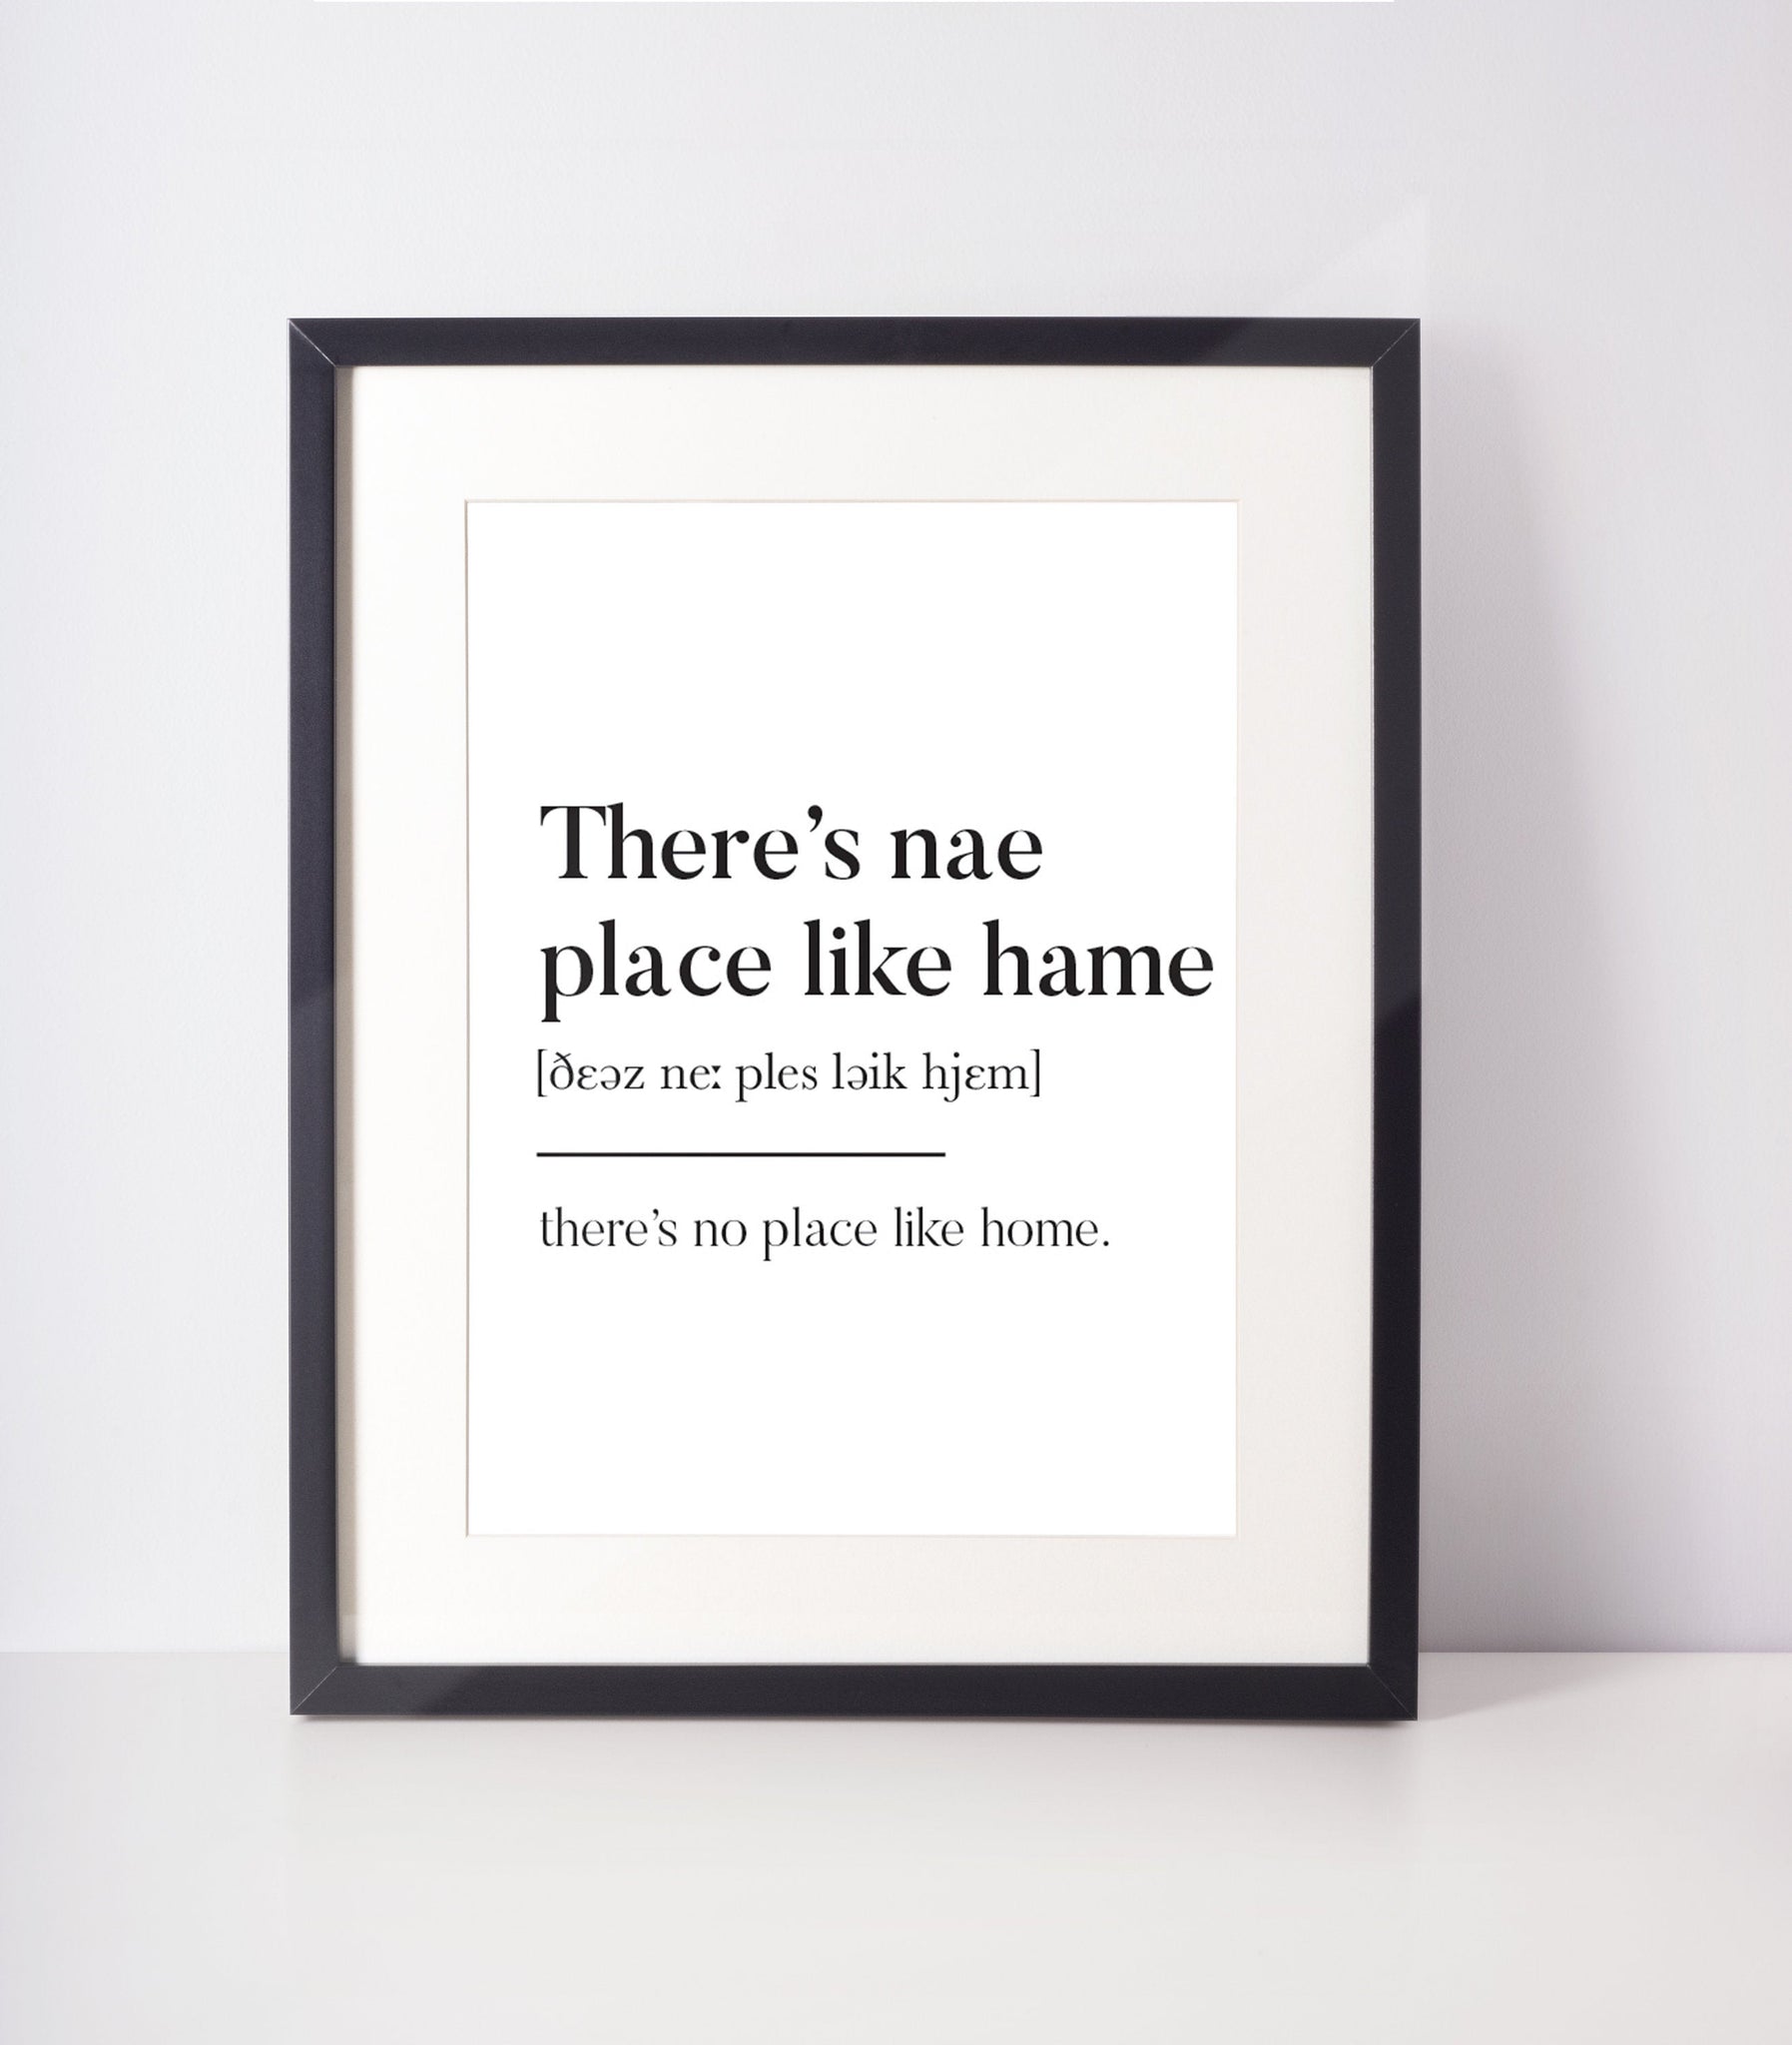 There's nae place like hame Scottish Slang Definition Unframed Print